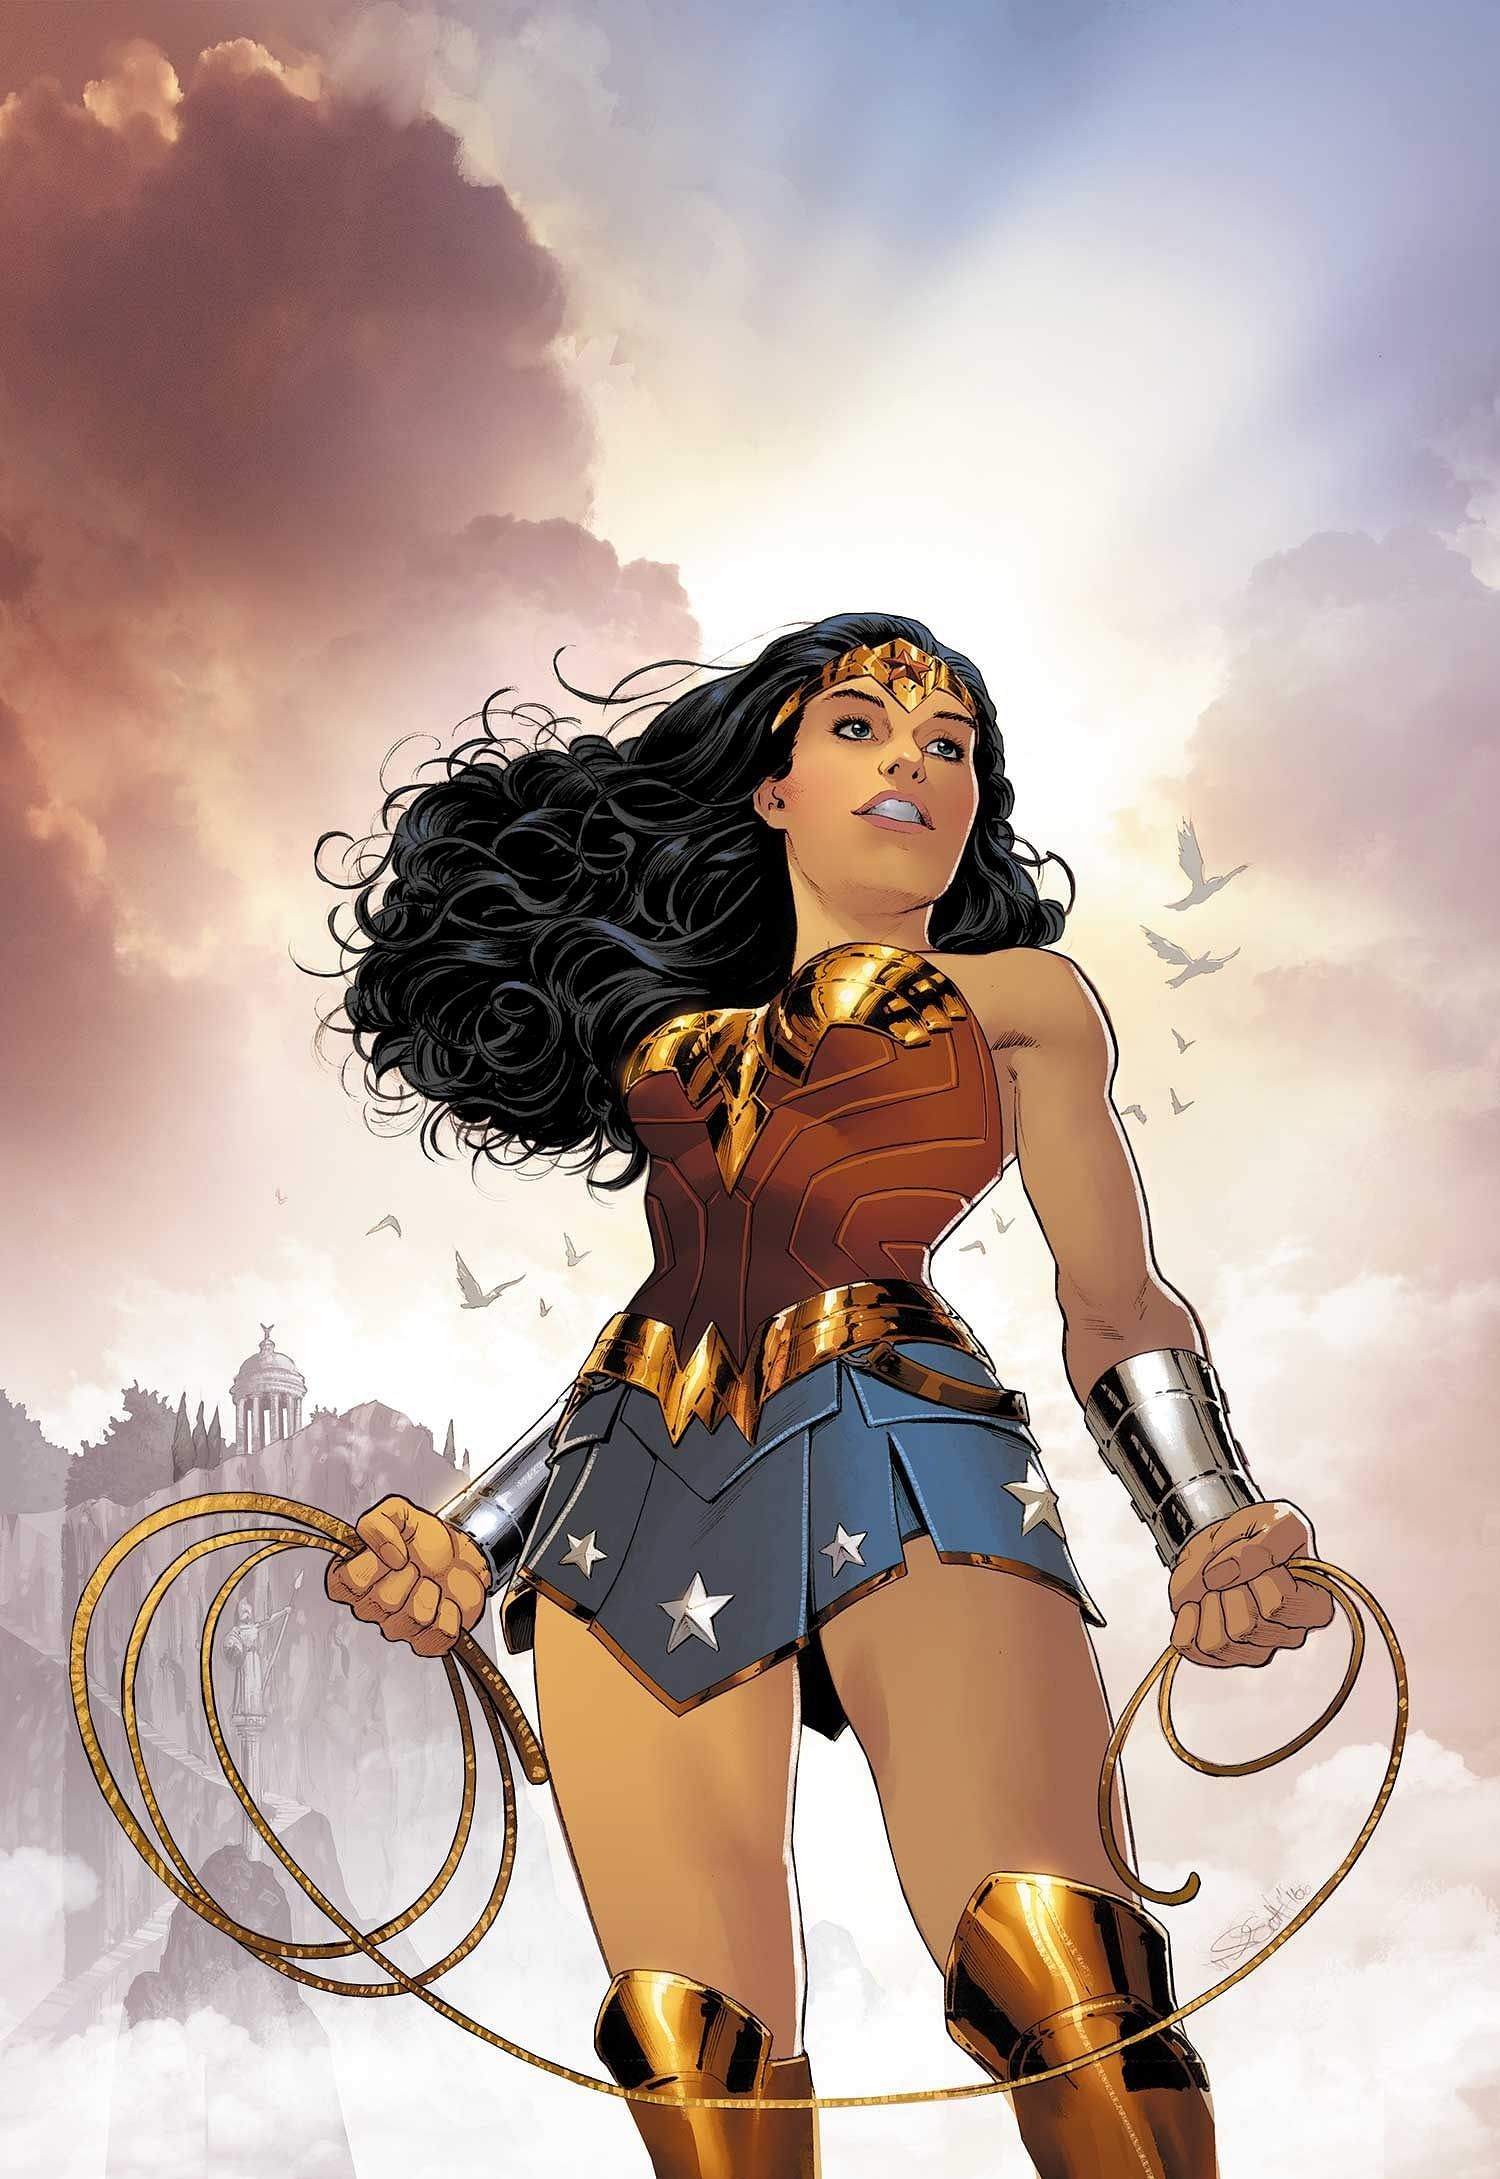 Wonder Woman (Image via WarnerMedia)